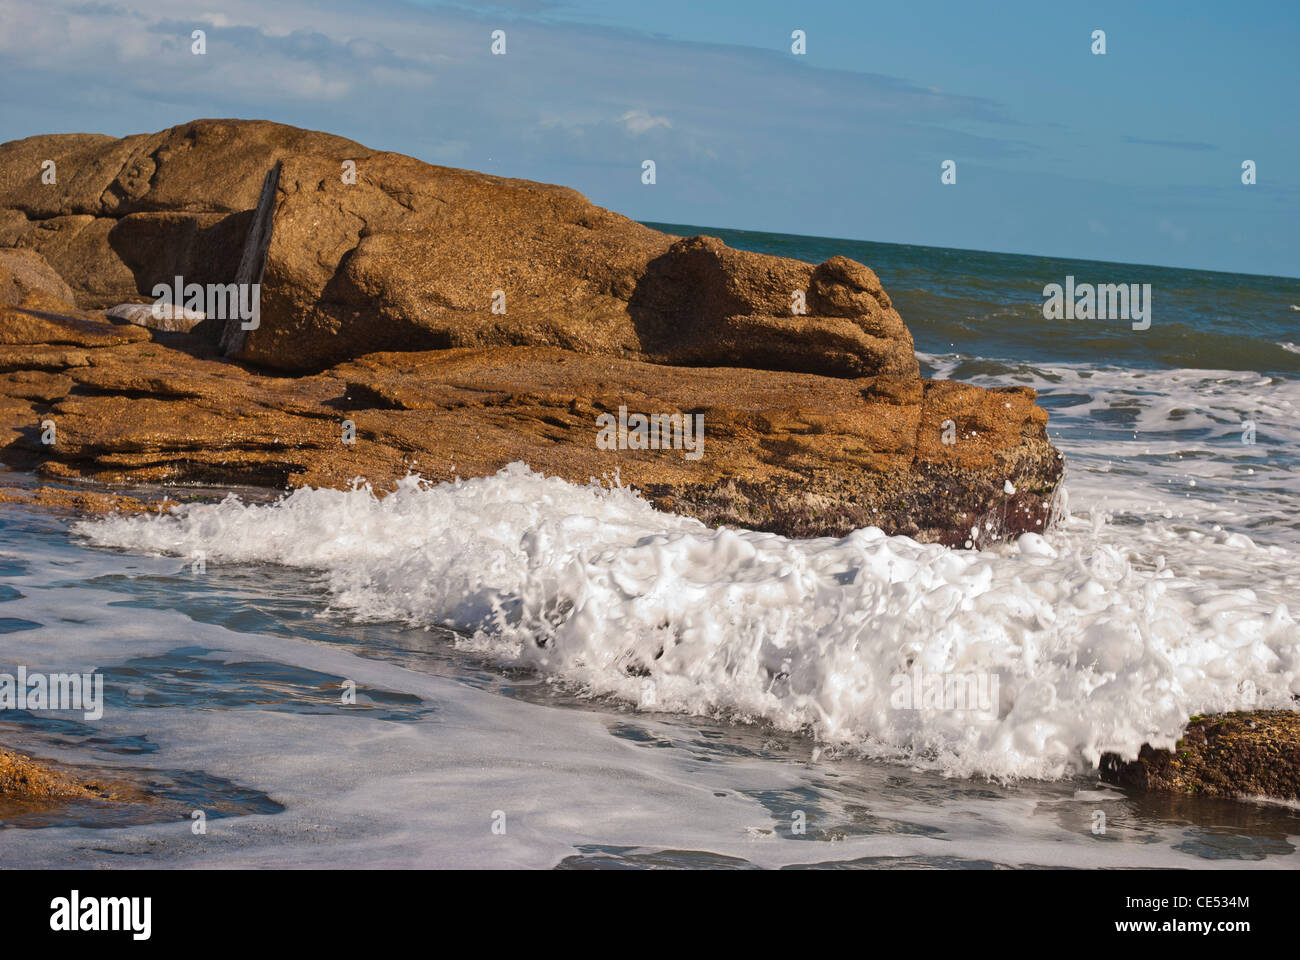 foam of sea on rocks, Punta del Este, Uruguay. Stock Photo